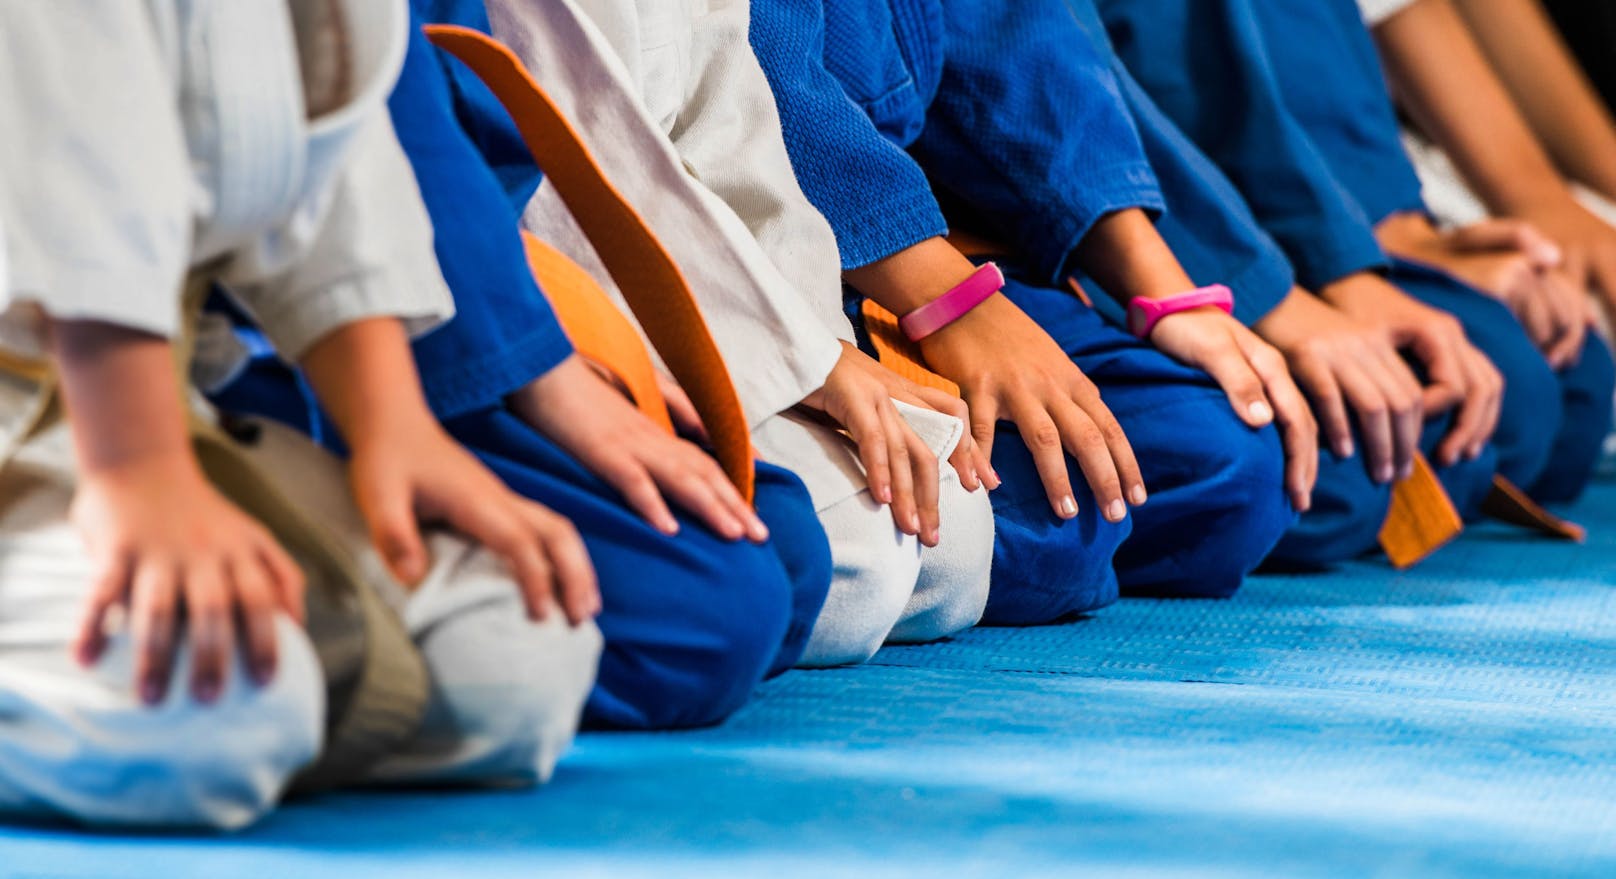 Kinder im Judo-Training (Symbolbild)